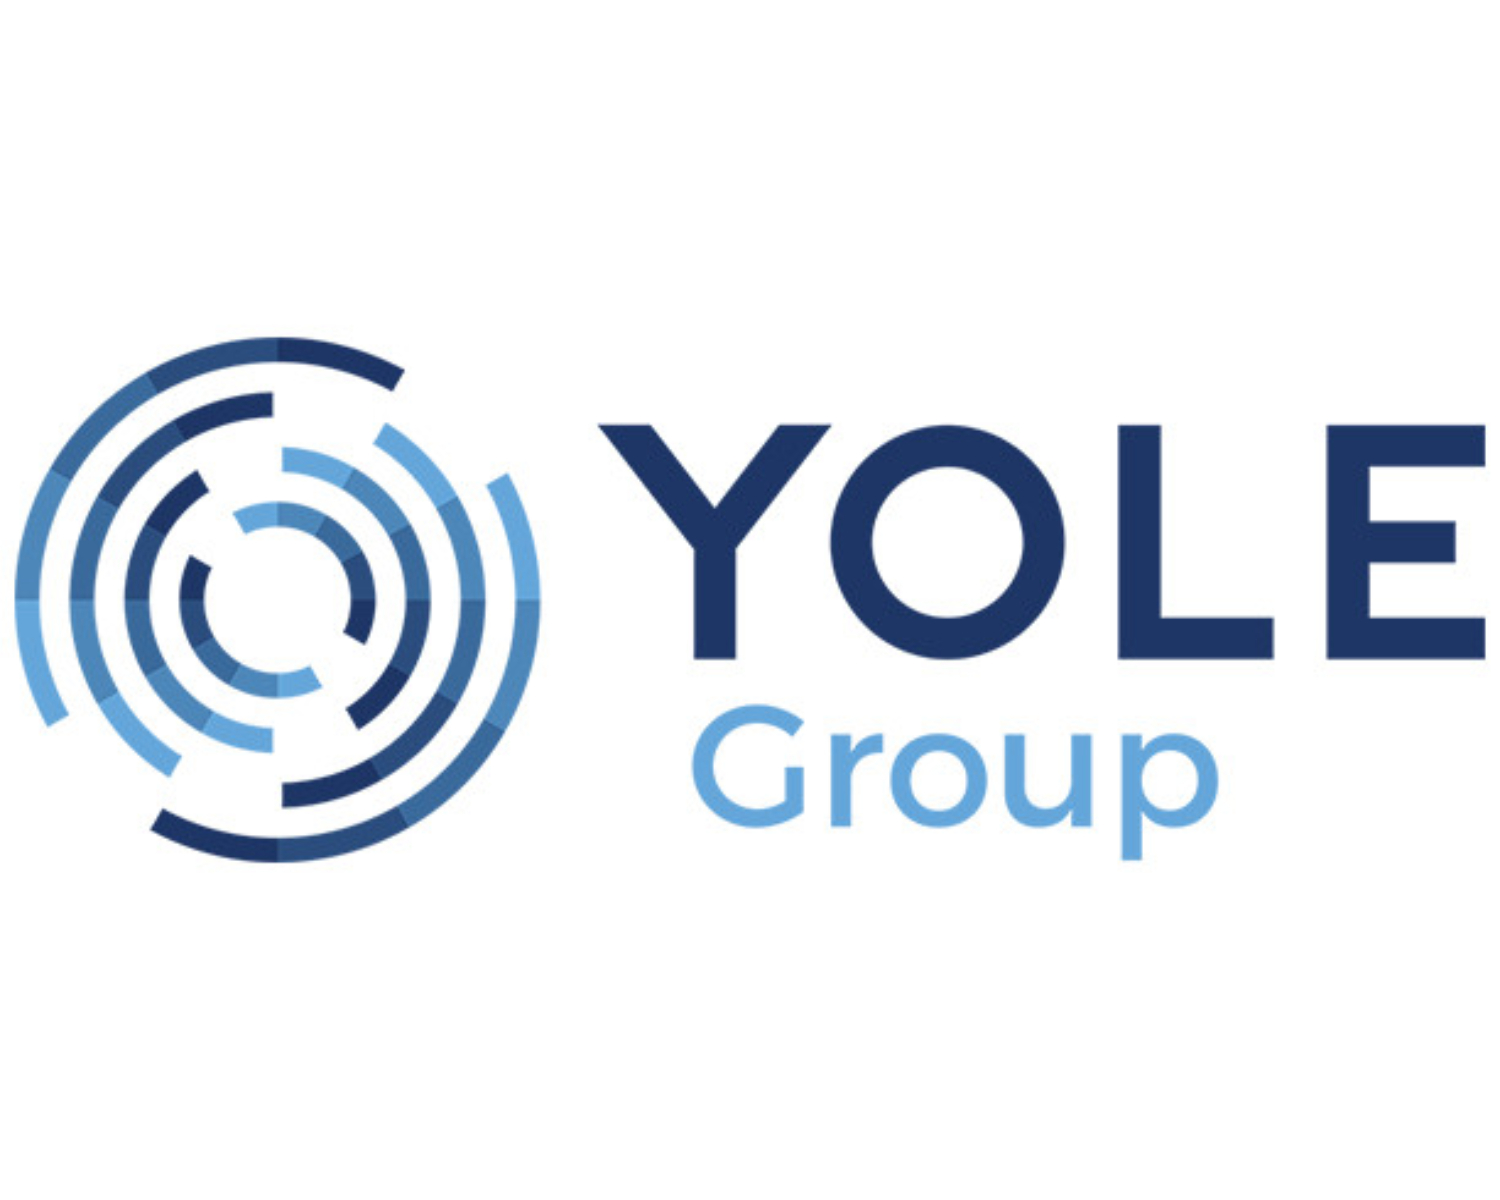 Yole Group